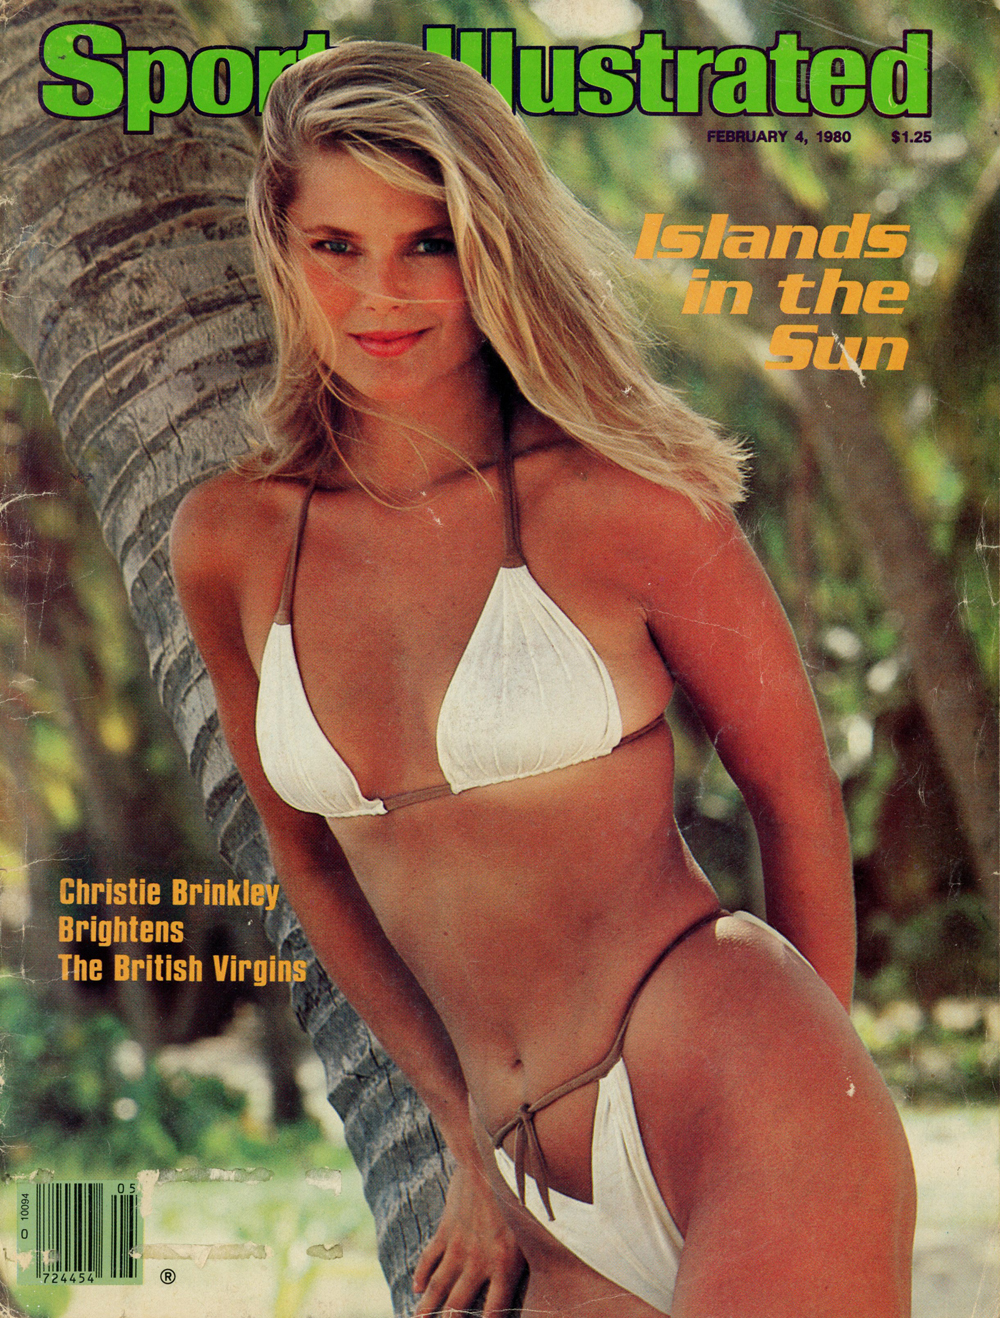 Christie Brinkley 1980 Sports Illustrated Magazine